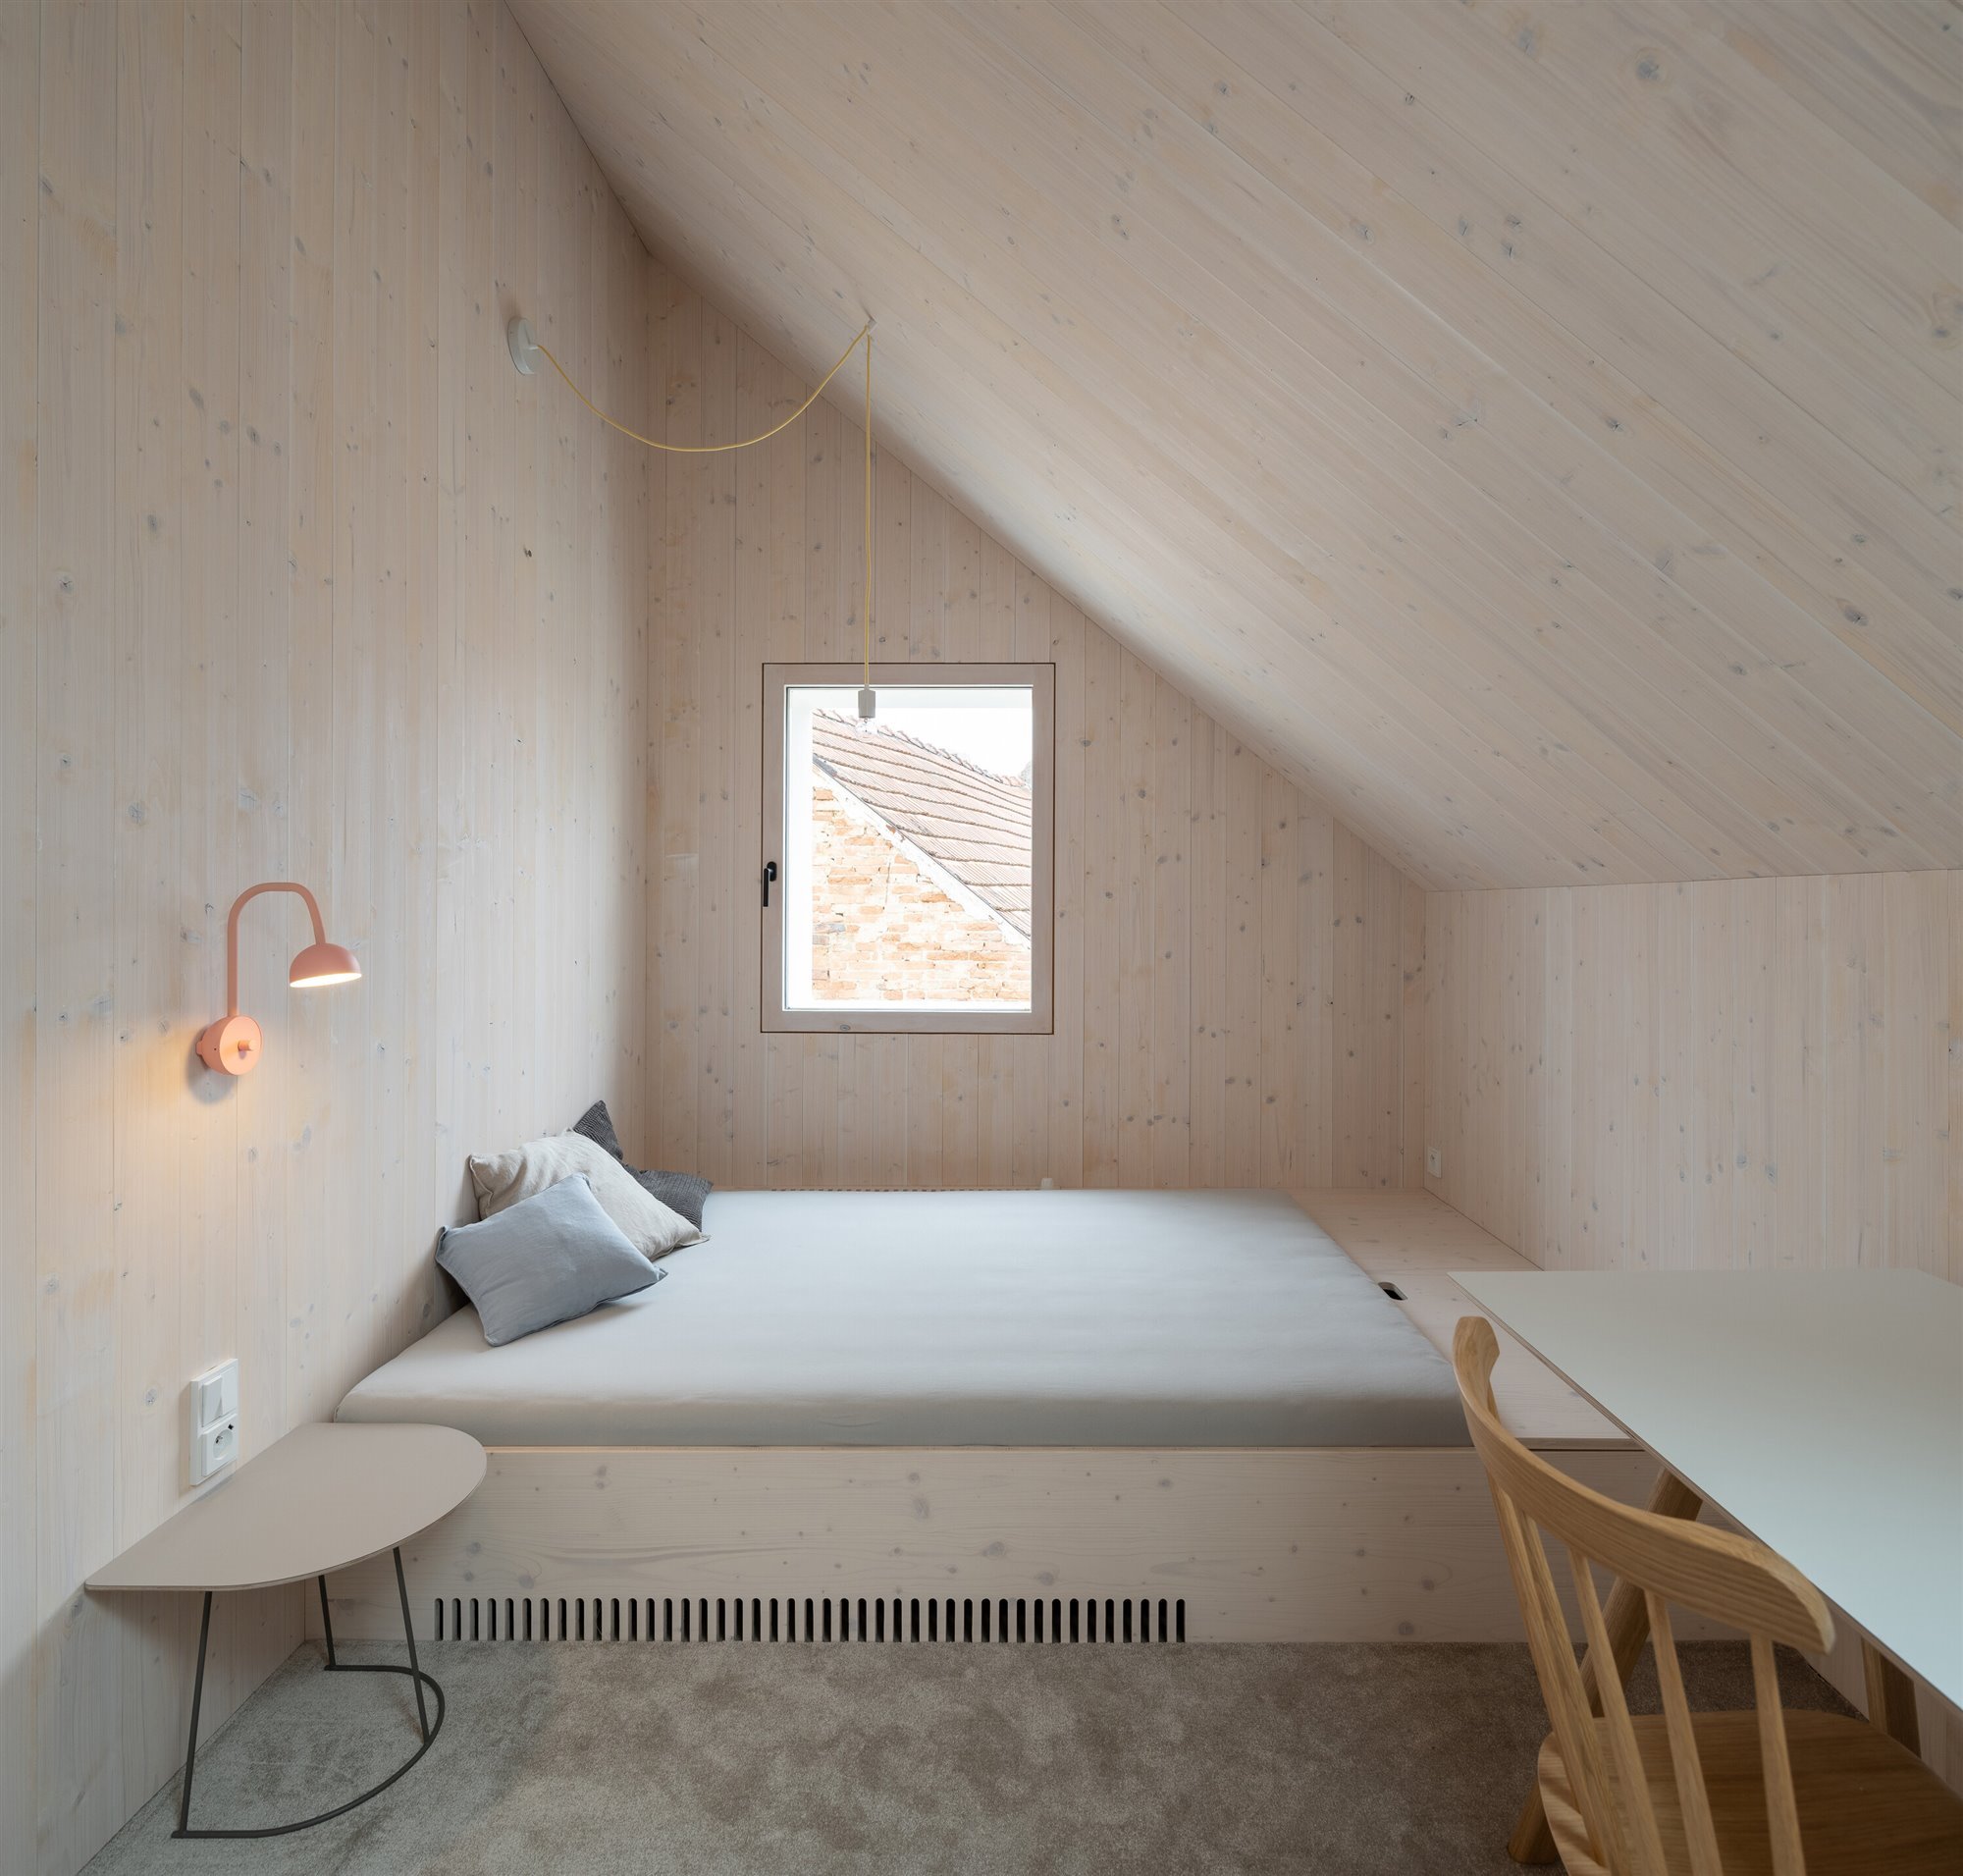 0 cama en habitación de madera atelier-111-kozina-house-alexshootsbuildings-28